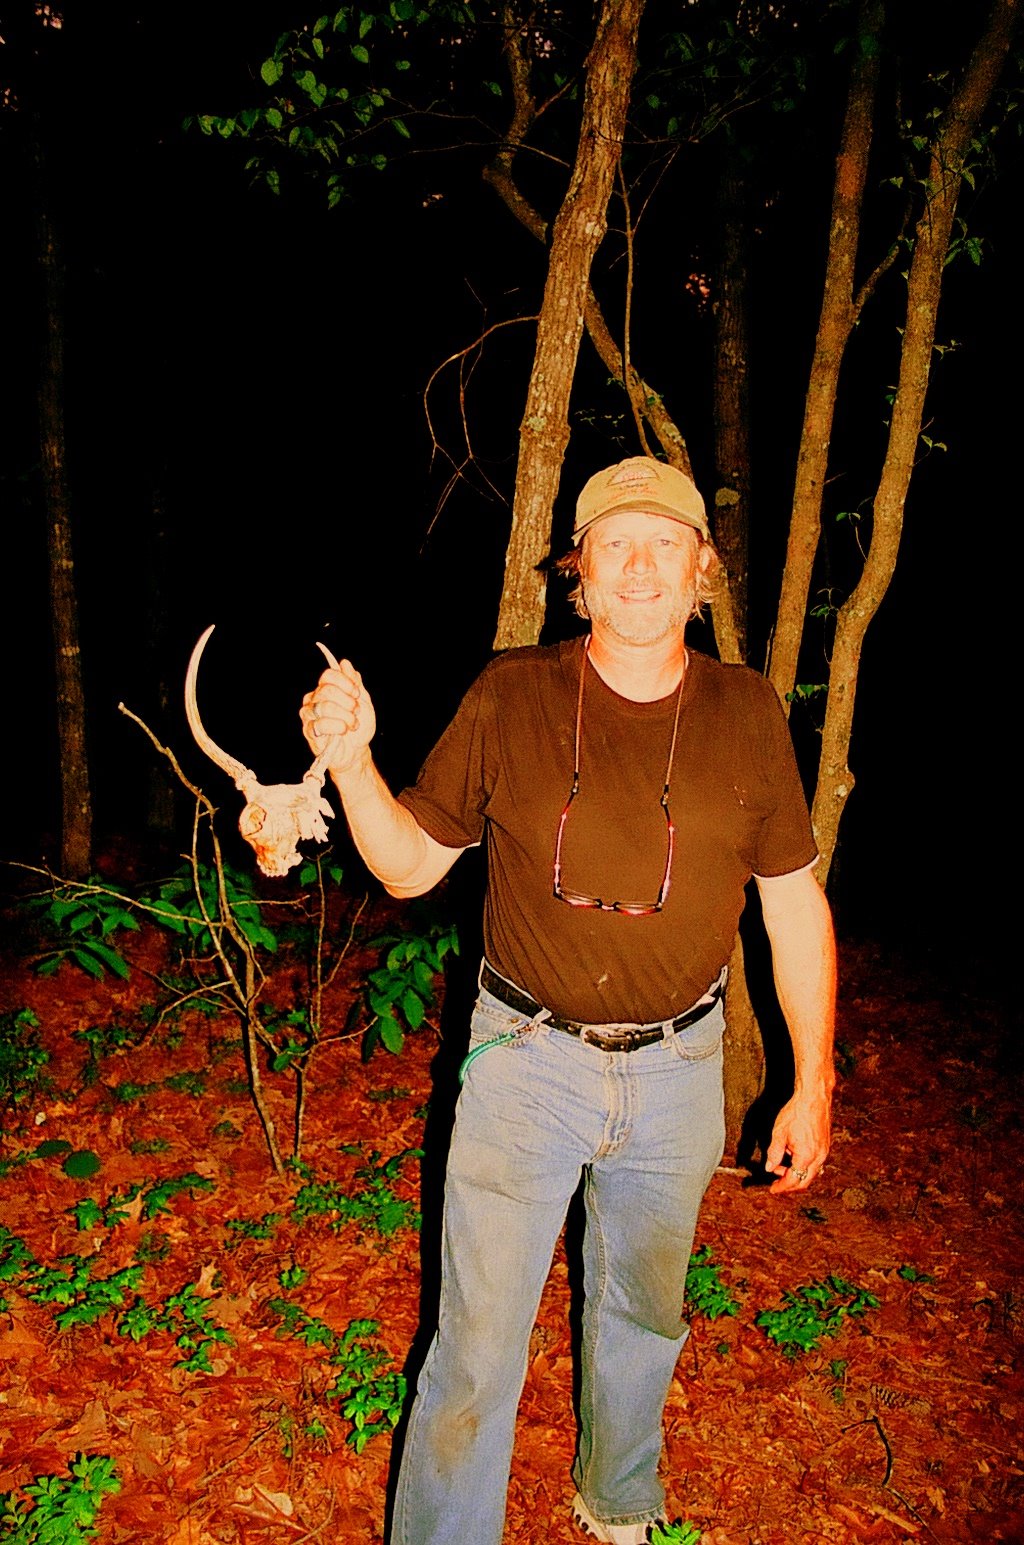 [Kerry+holding+deer+skull.jpg]